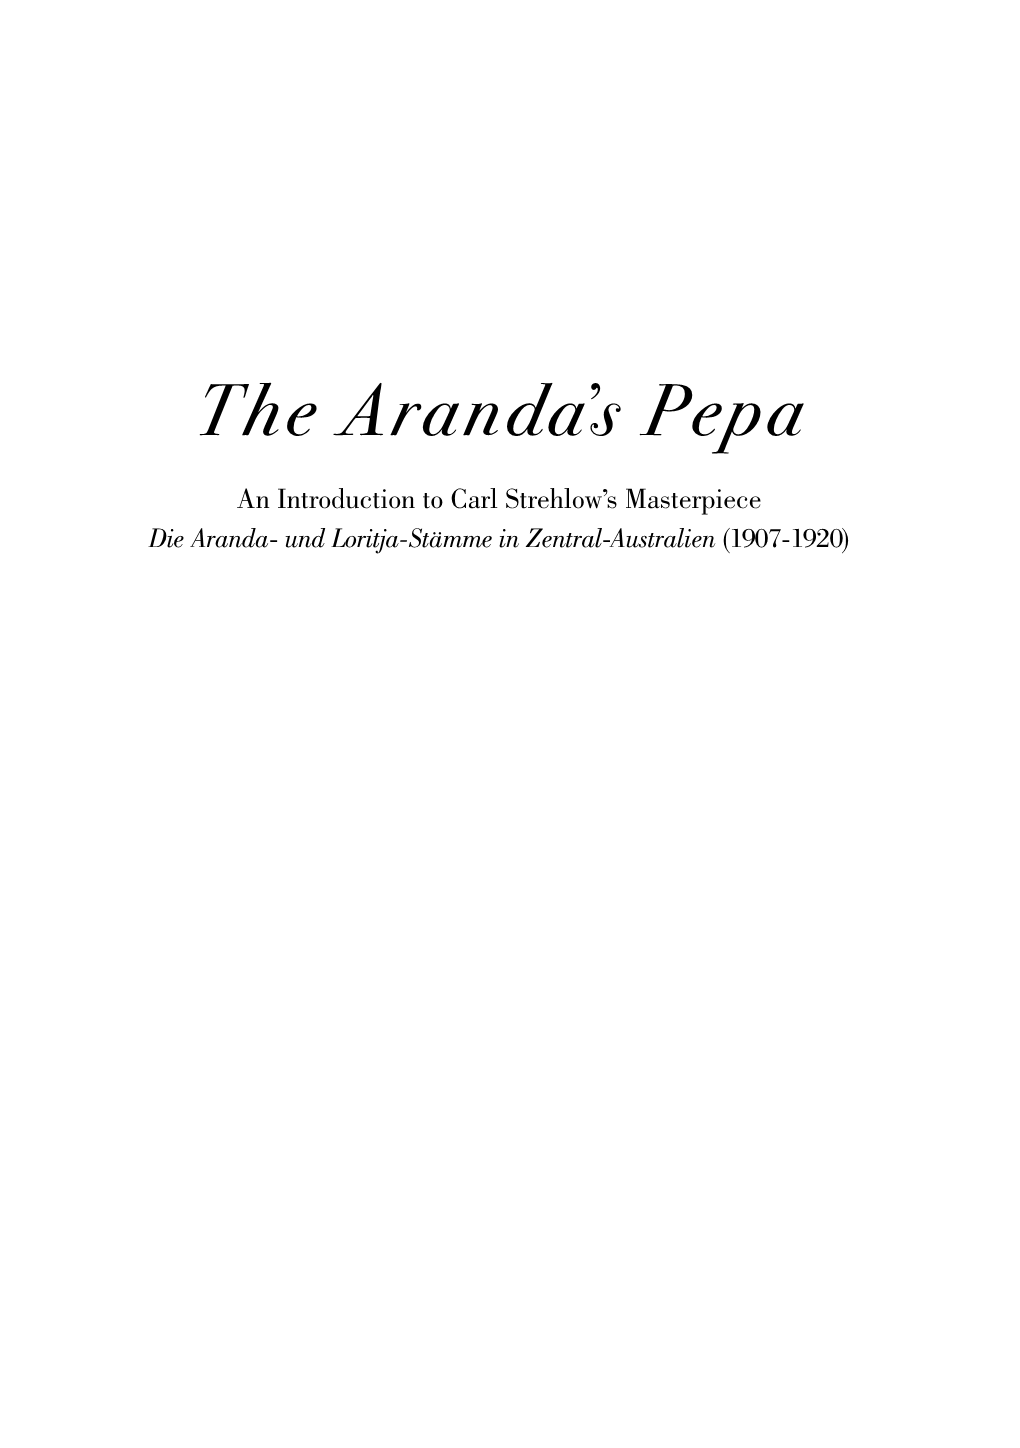 An Introduction to Carl Strehlow's Masterpiece Die Aranda